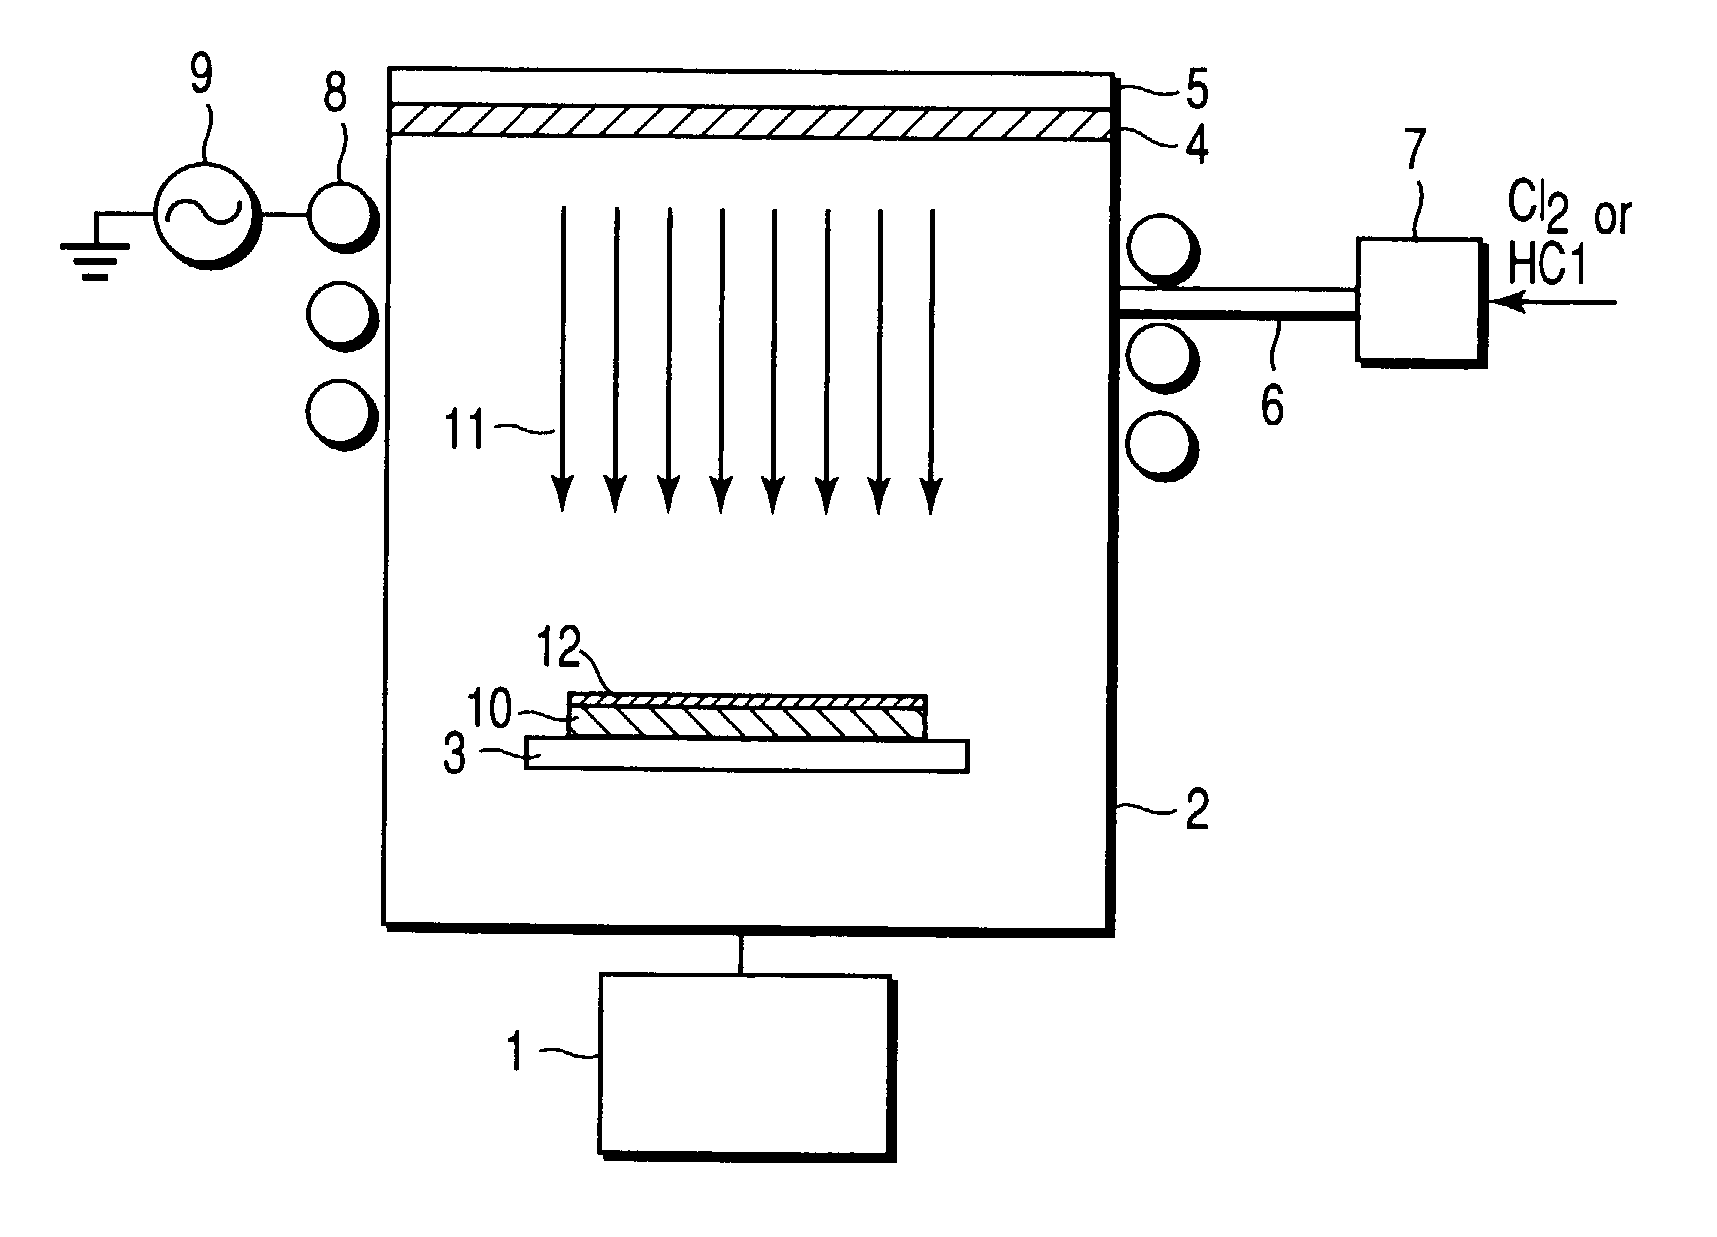 Metal film vapor phase deposition method and vapor phase deposition apparatus